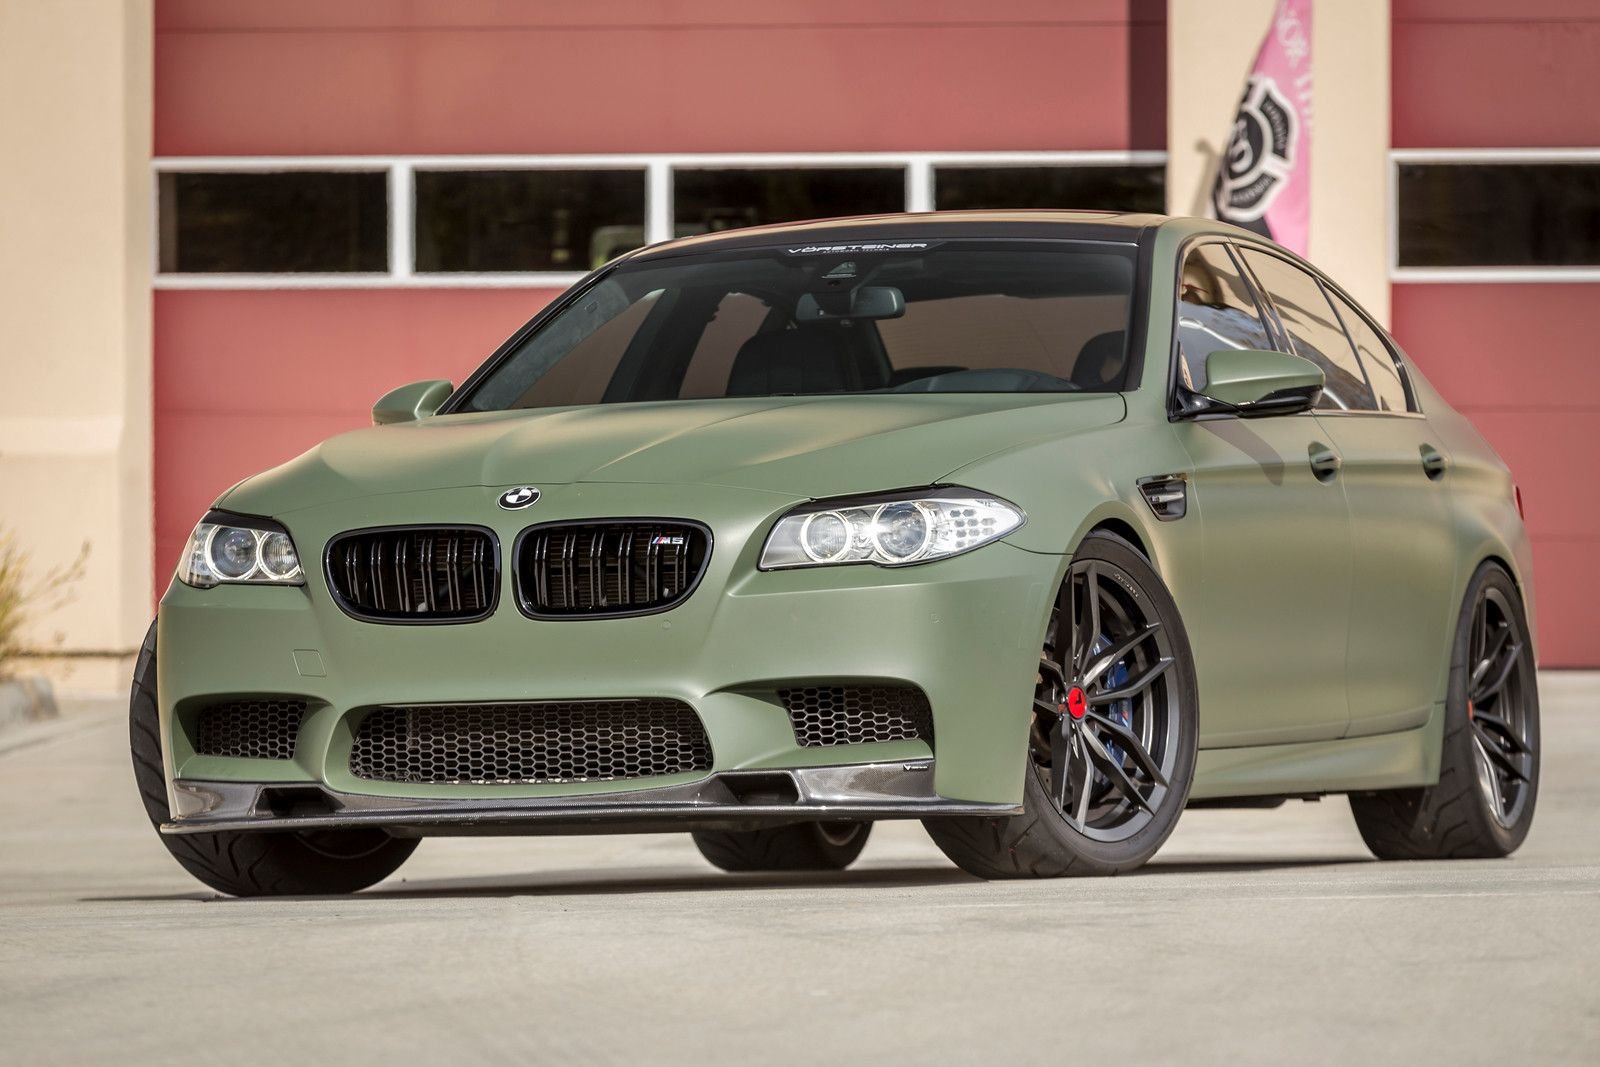 Бмв хаки. BMW m5 f10 Green. BMW 5 f10 Military Green. F10 BMW m5 зеленая. BMW f10 хаки.